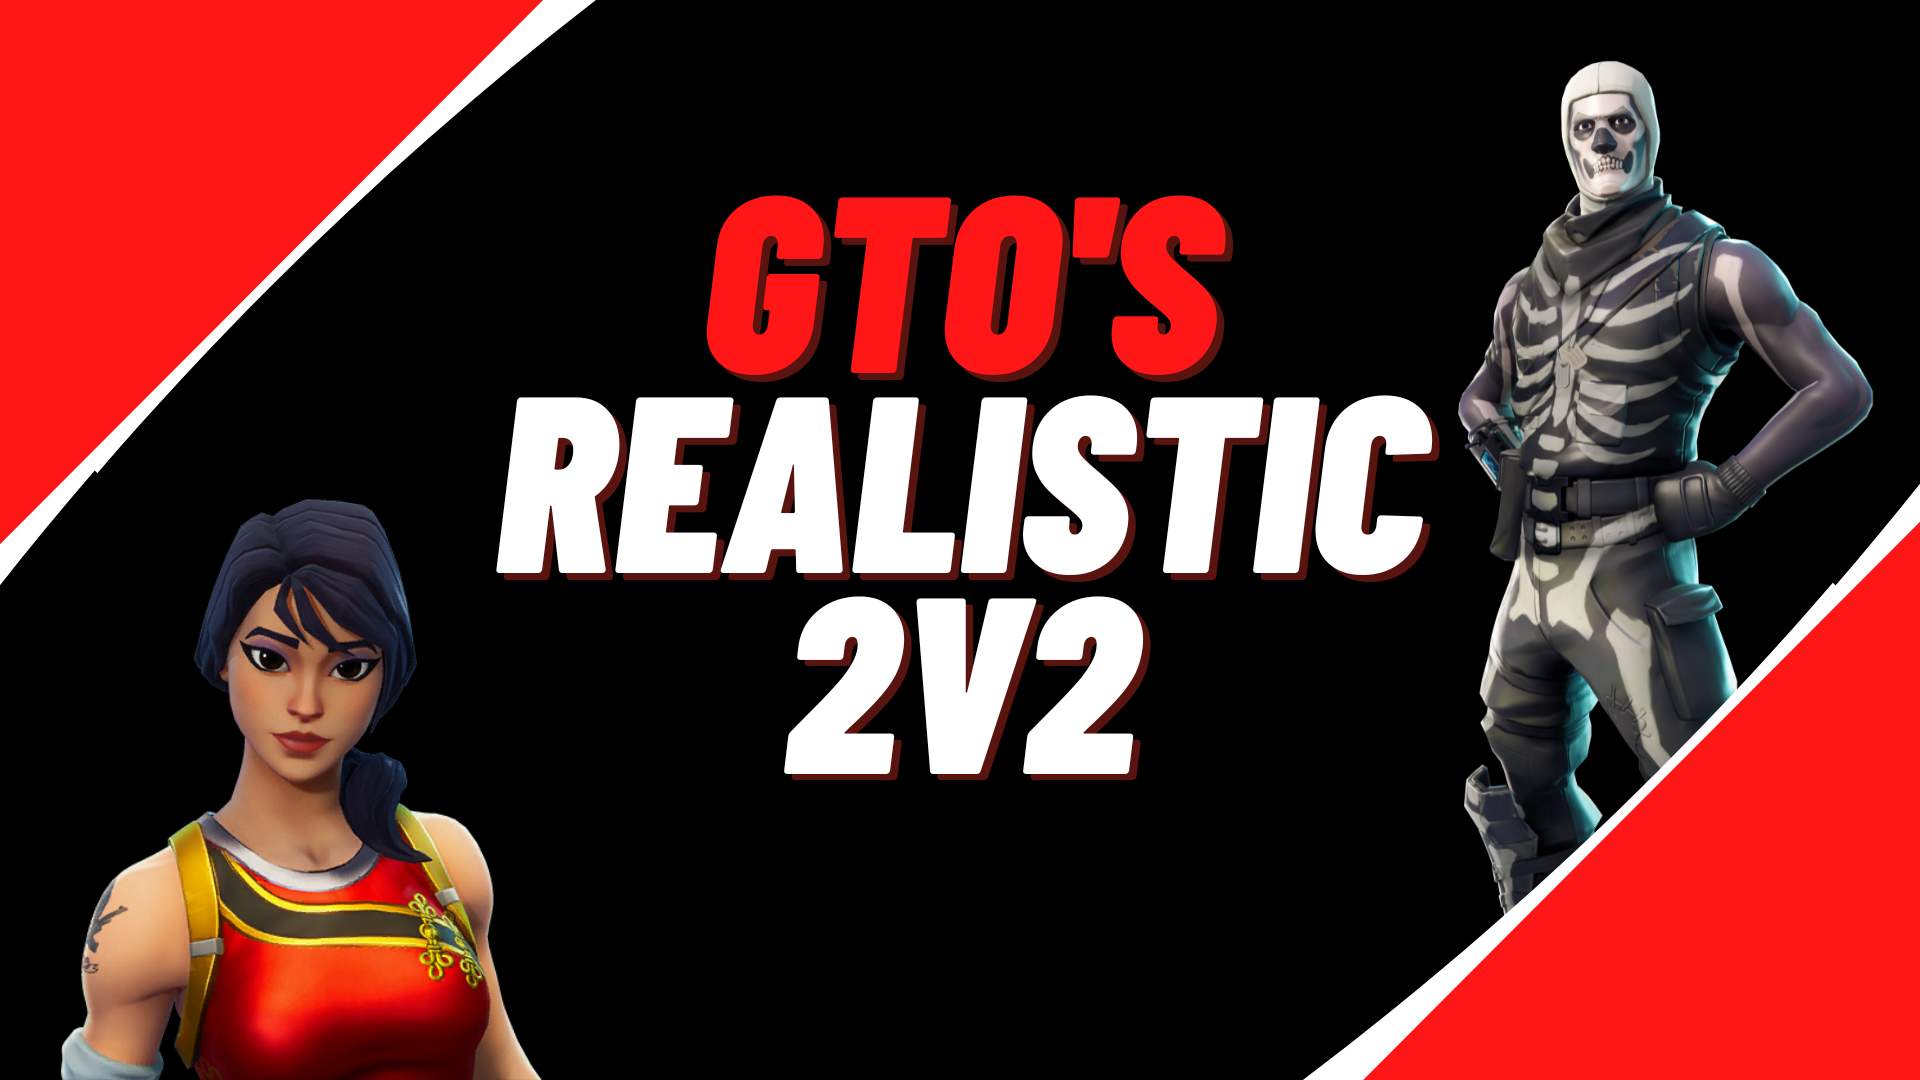 GTO'S 2V2 REALISTIC